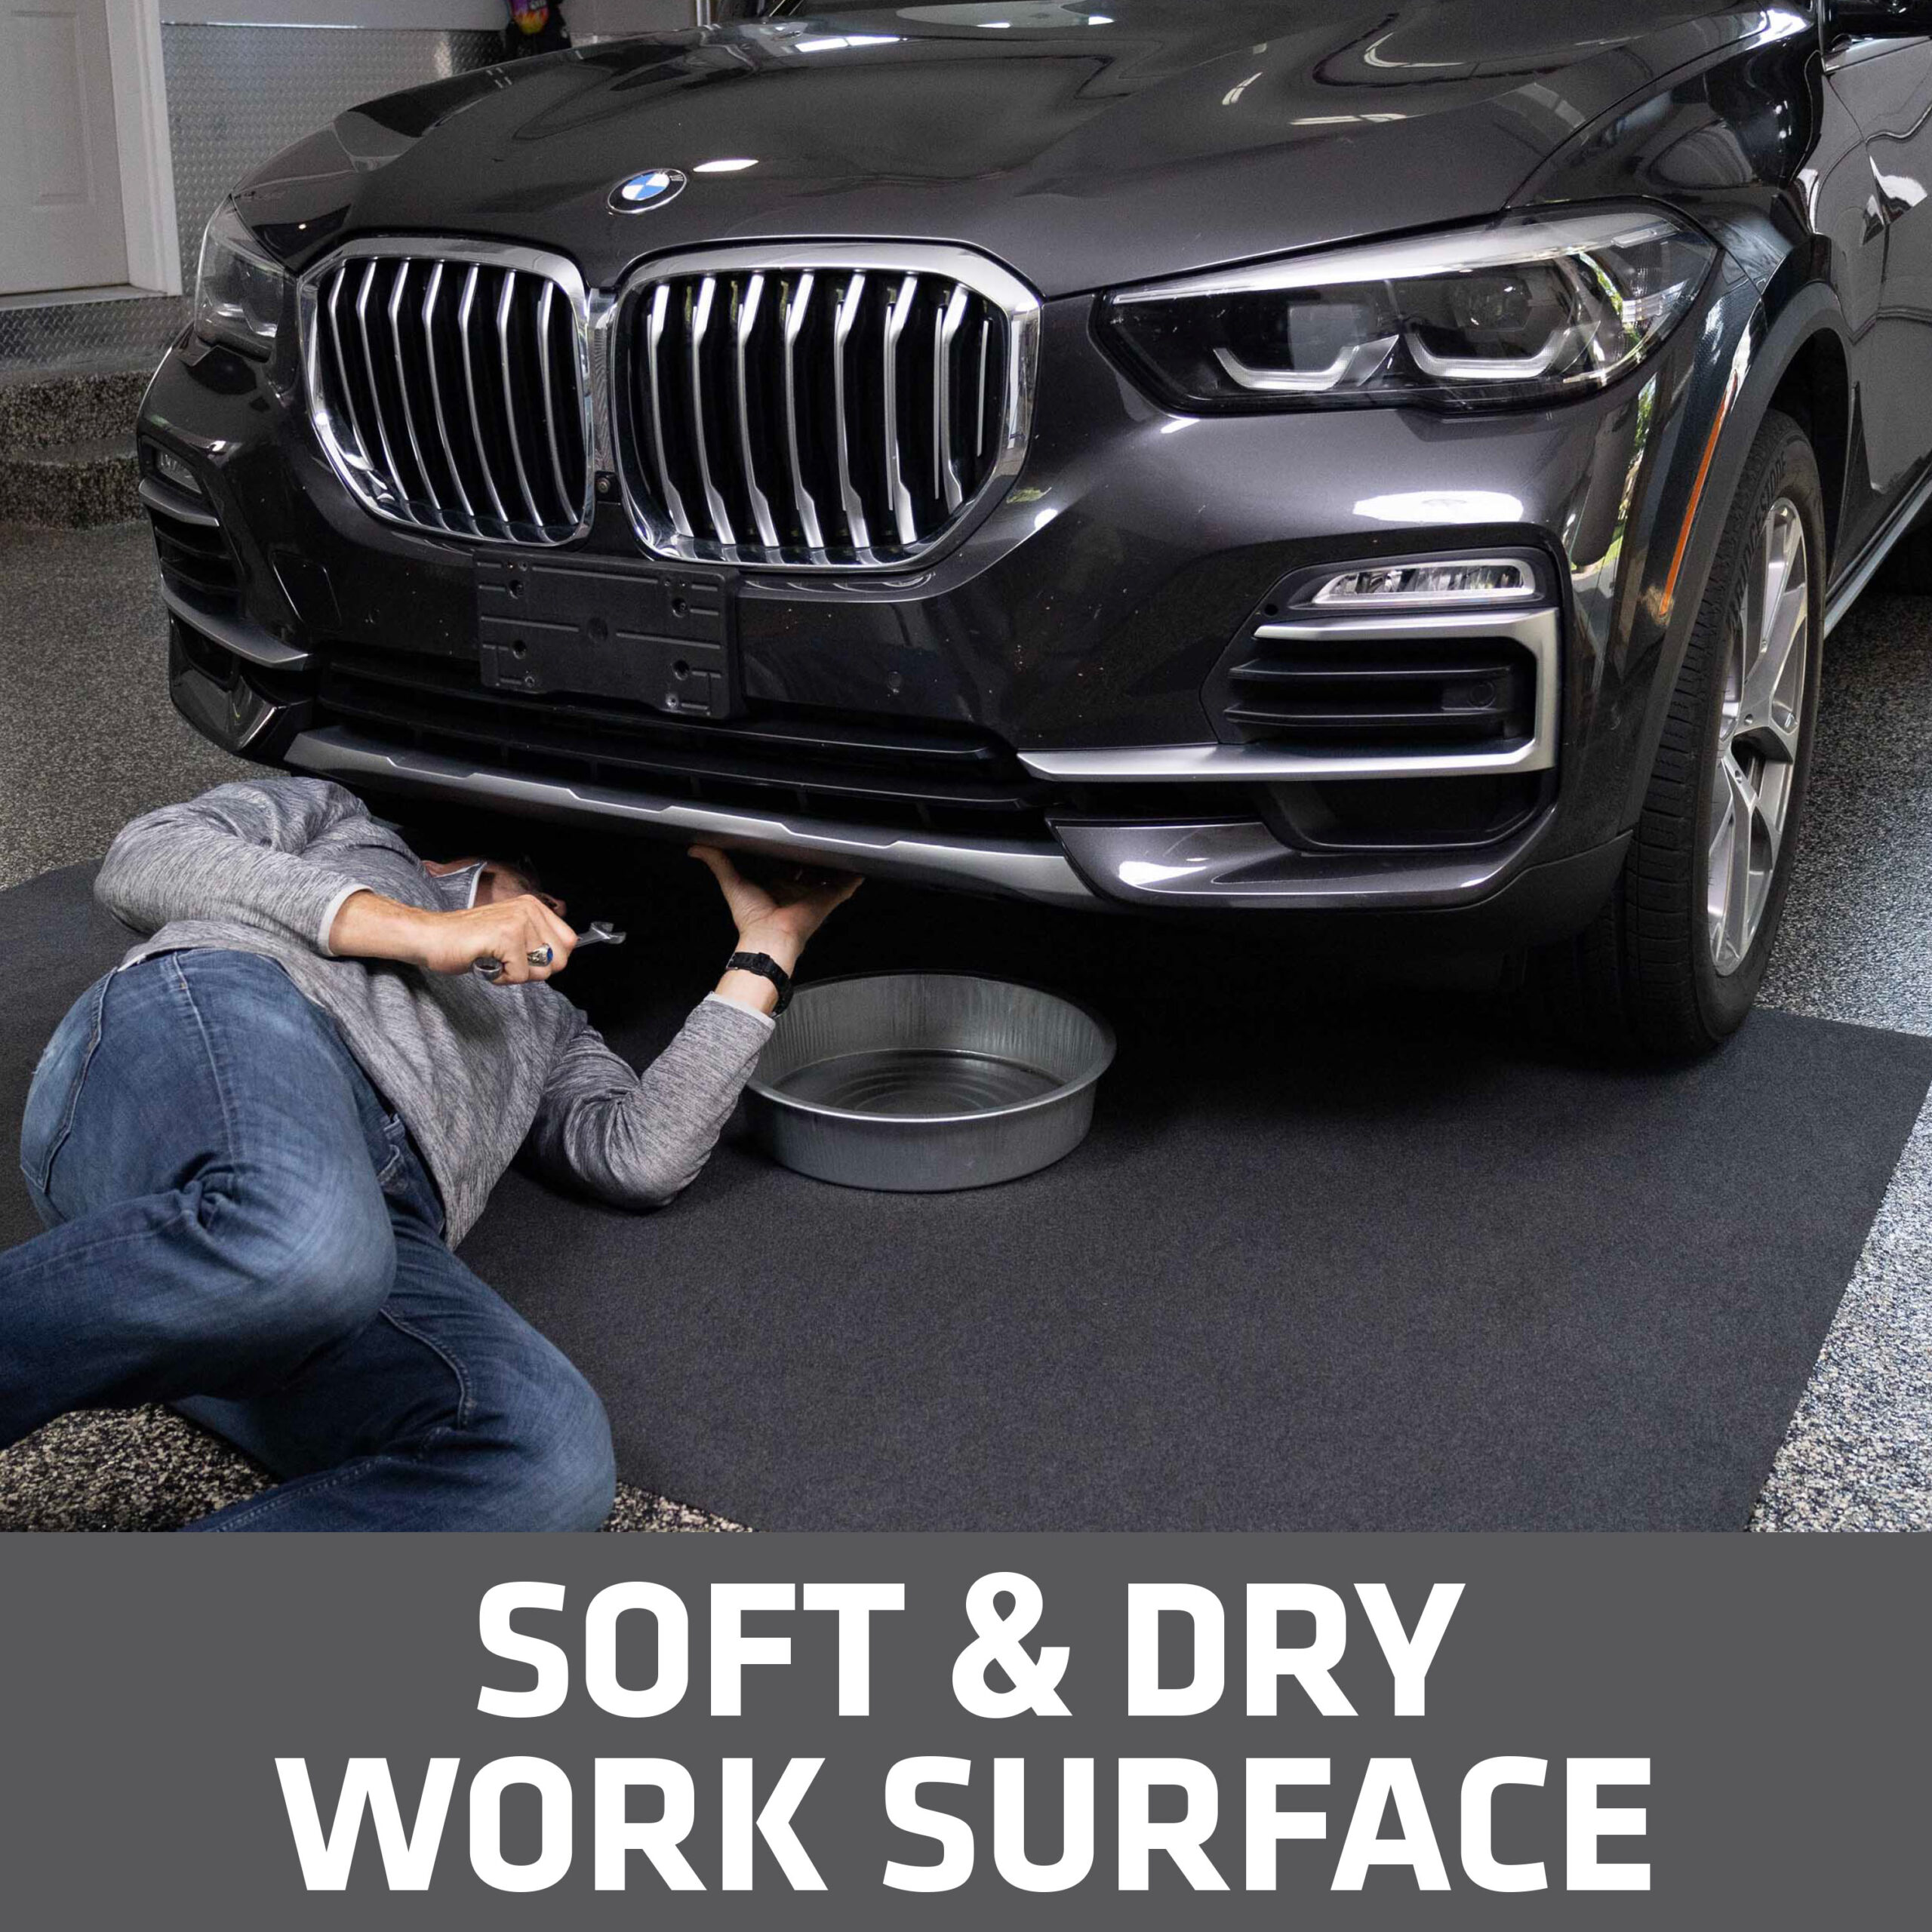 https://drymate.com/wp-content/uploads/2015/12/4-Drymate-Maintenance-Mat-Oil-Spill-Mat-absrobent-drip-floor-surface-garage-protection-pad-waterproof-reusable-durable-V2-scaled.jpg